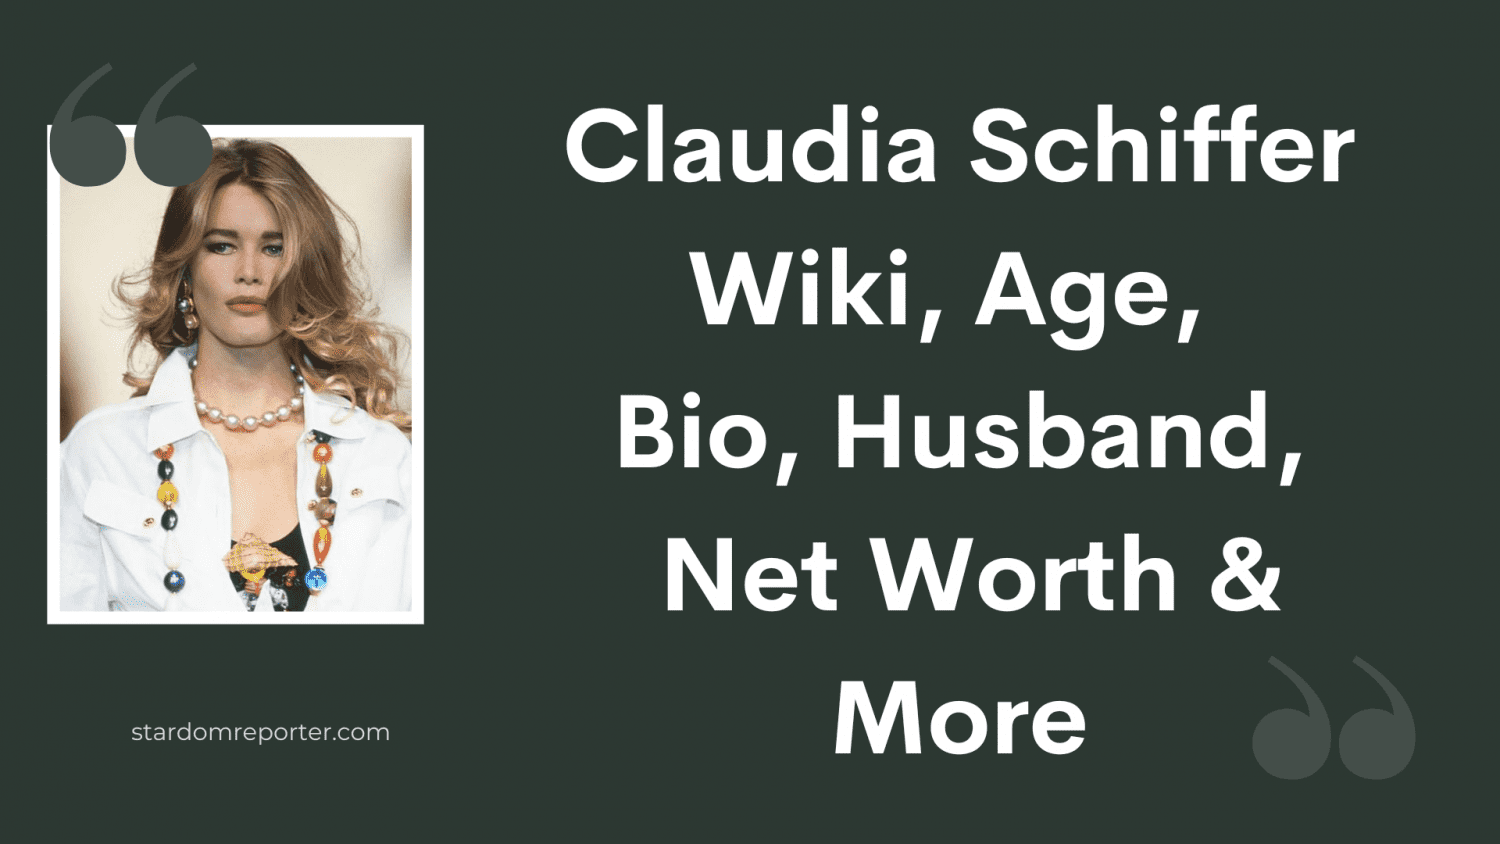 Claudia Schiffer Wiki, Age, Bio, Husband, Net Worth & More - 39